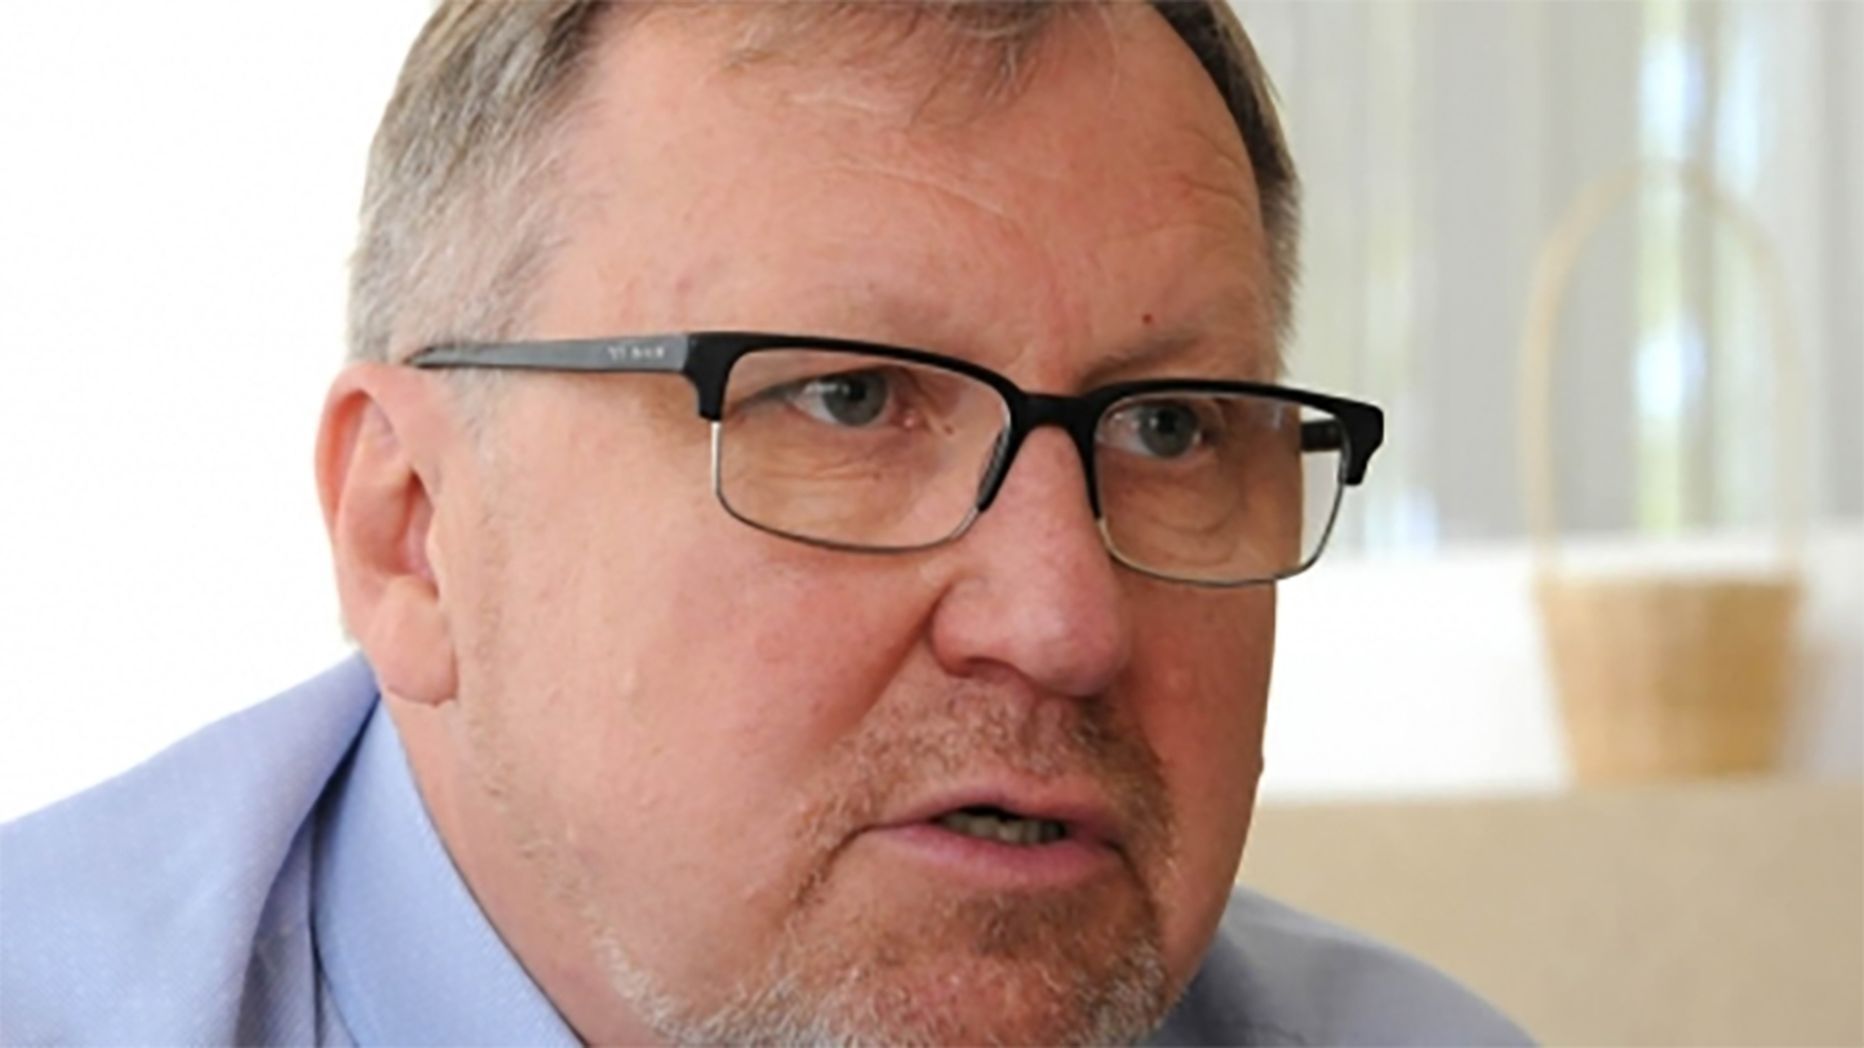 Aivars Priedols, Chairman of the Southern Kurzeme County Council